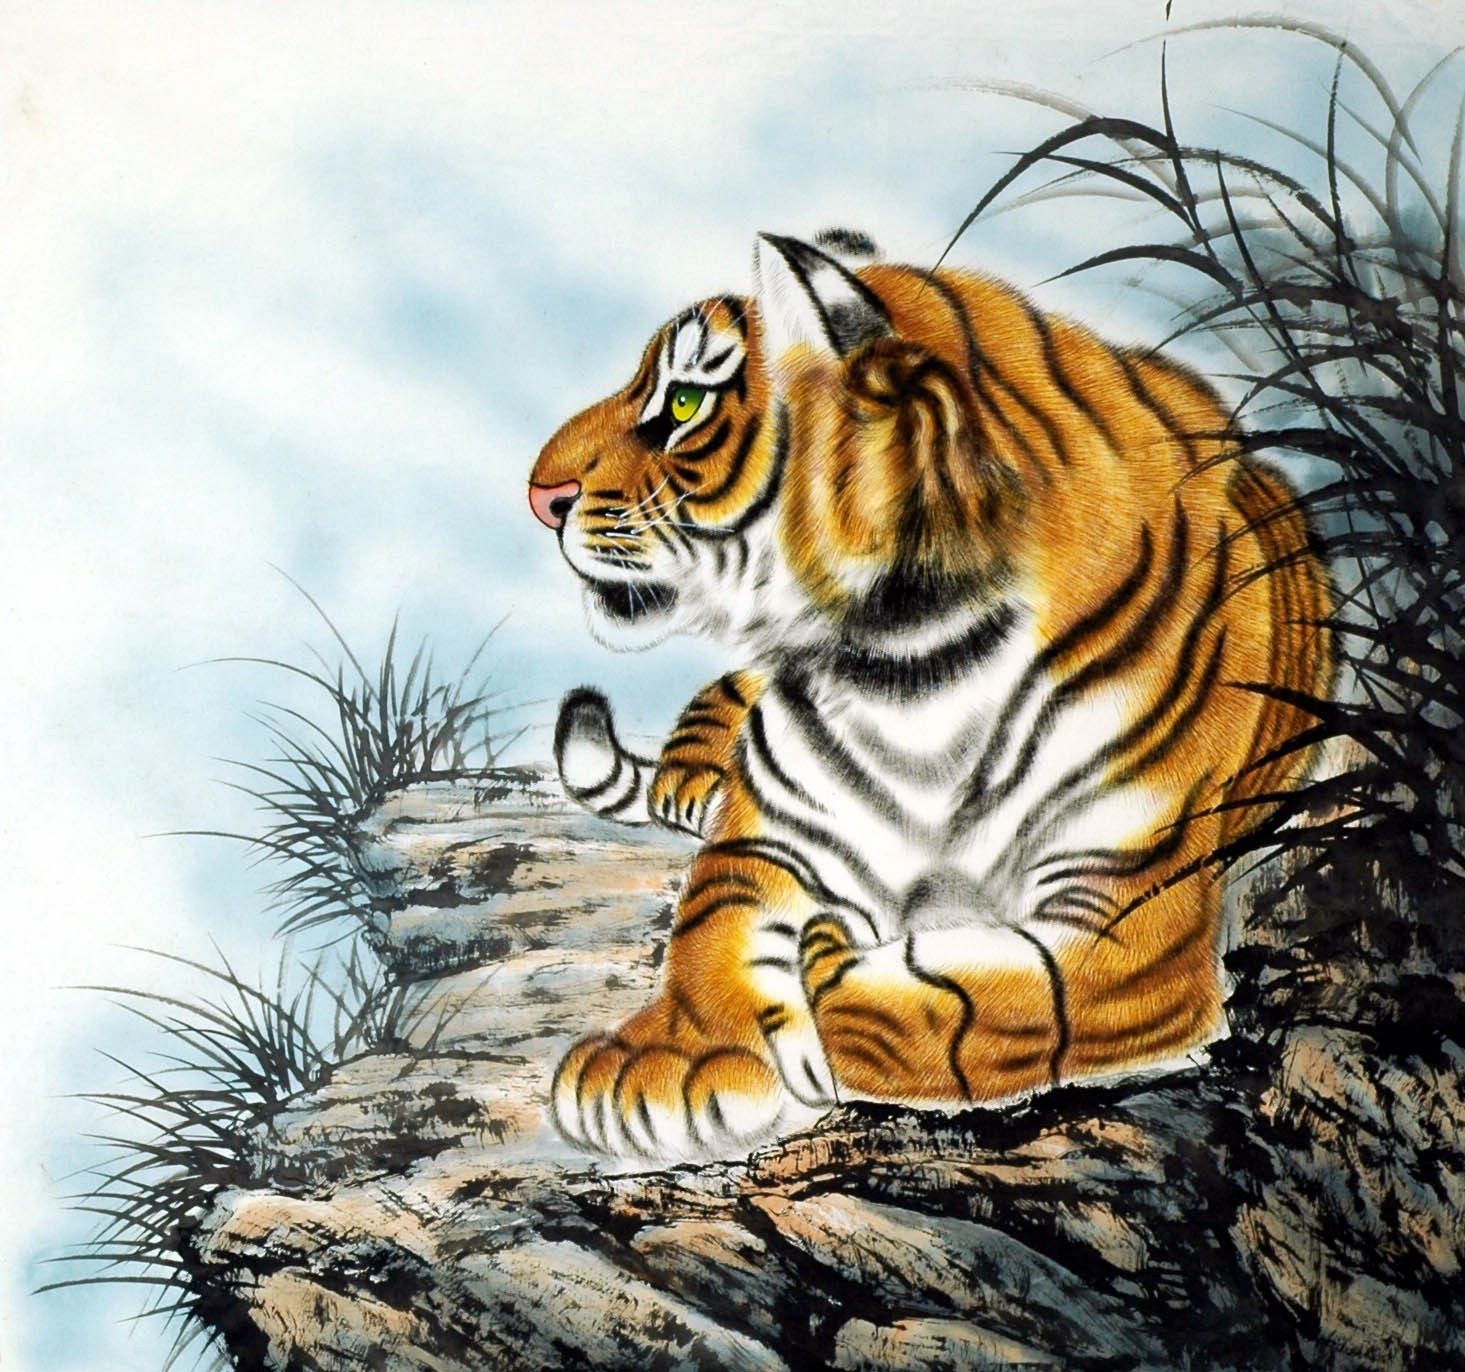 Chinese Tiger Painting - CNAG008516